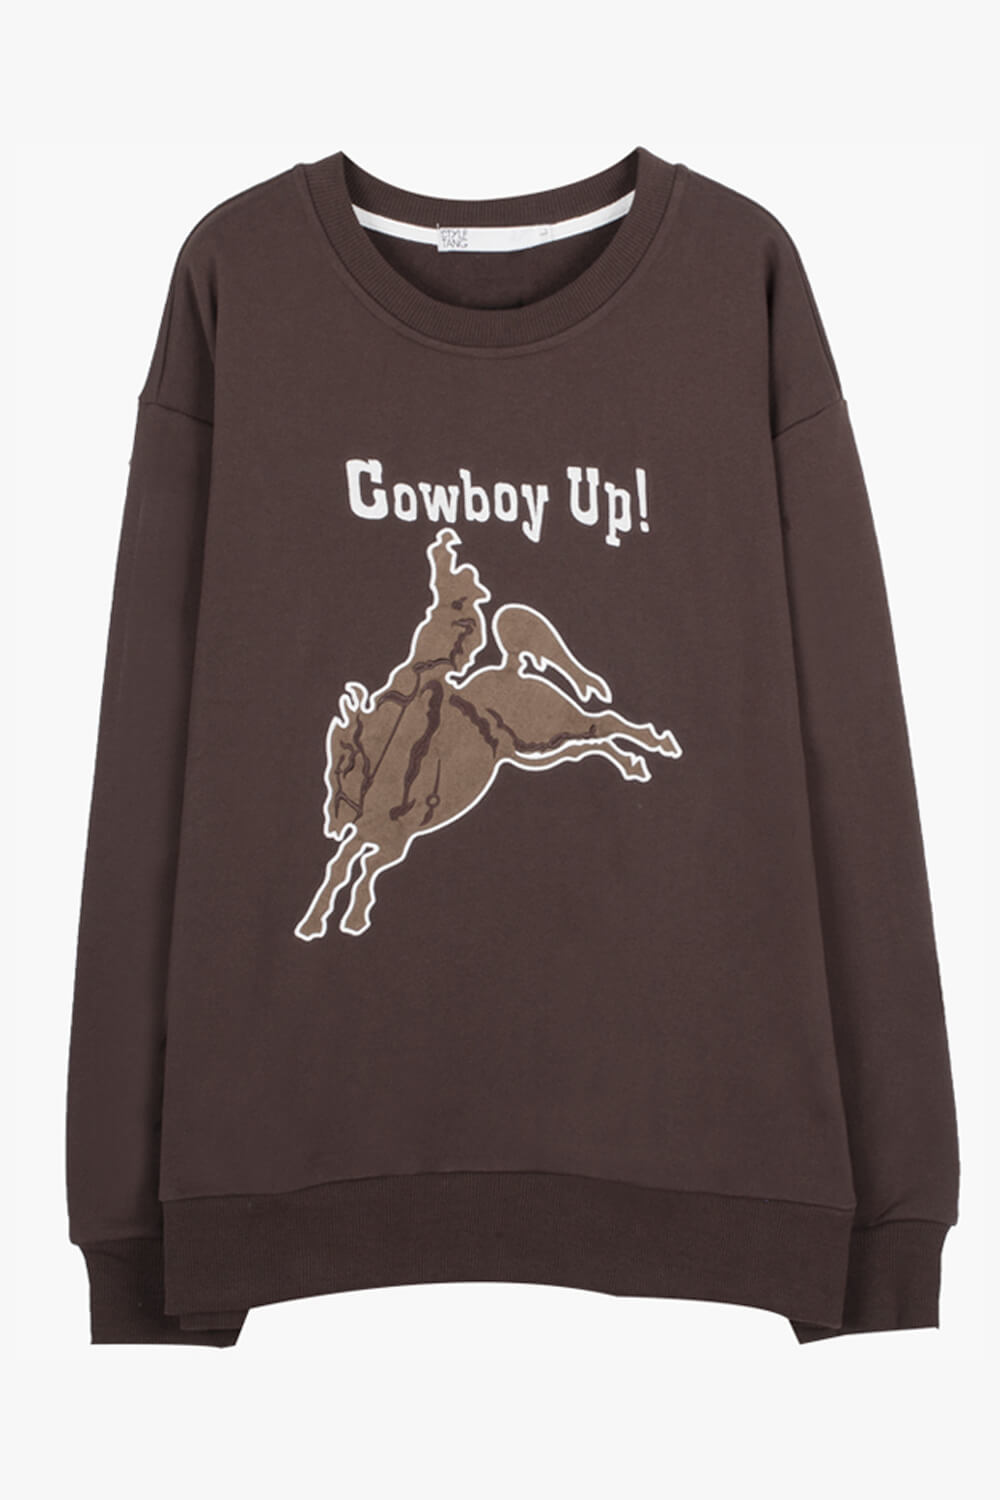 Cowboy Up Brown Sweatshirt